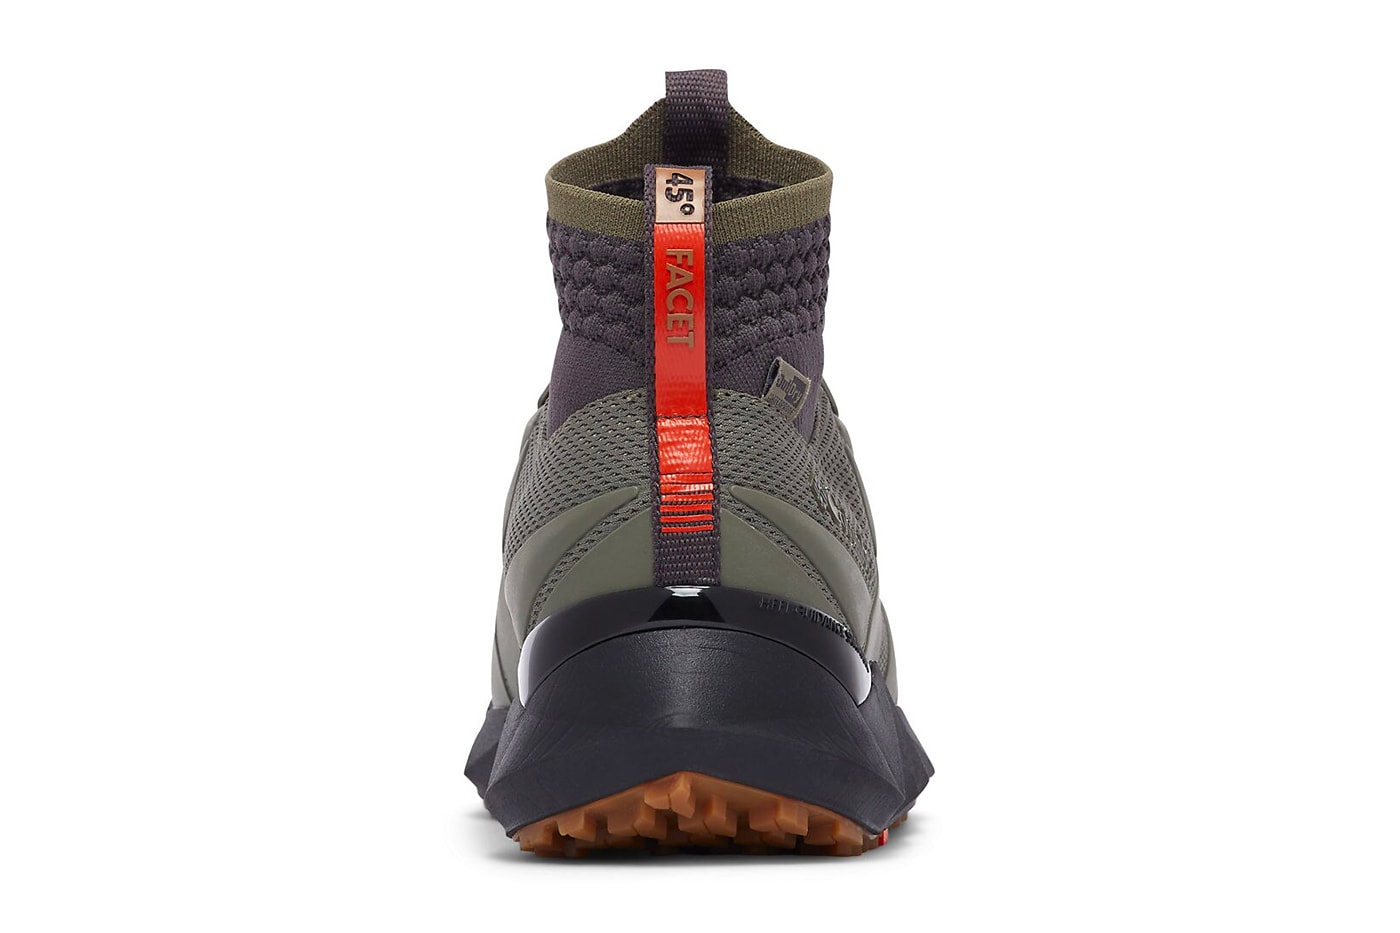 Facet™ 45 OutDry™ Technical Hiking Sneaker Columbia Facet 45 OutDry trail shoes sneakers hiking outdoors waterproof omni grip